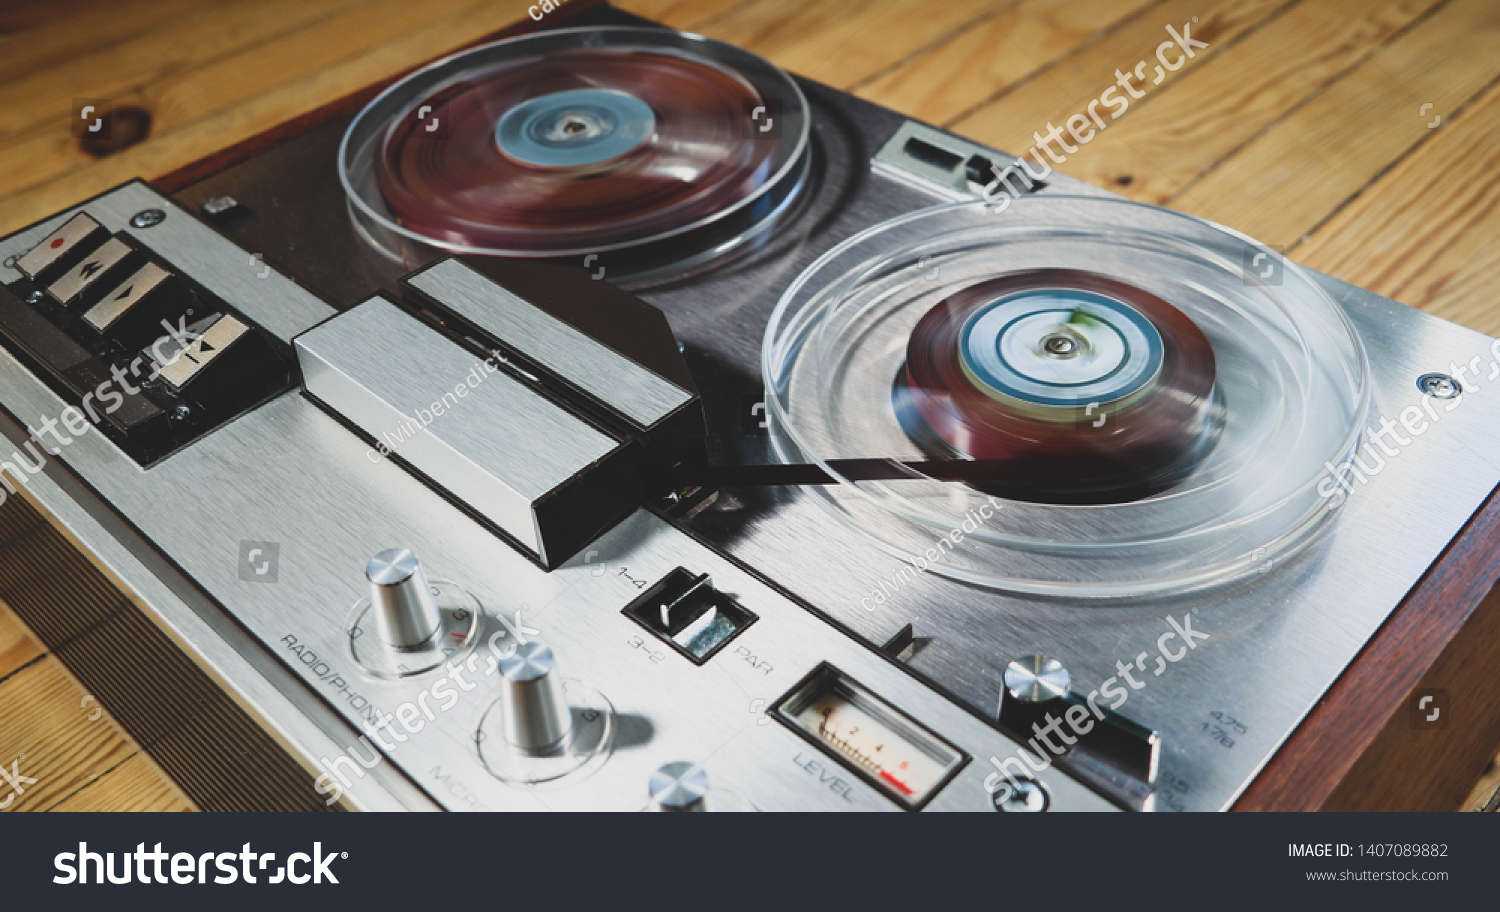 Vintage reel to reel tape recorder on a wooden floor #1407089882